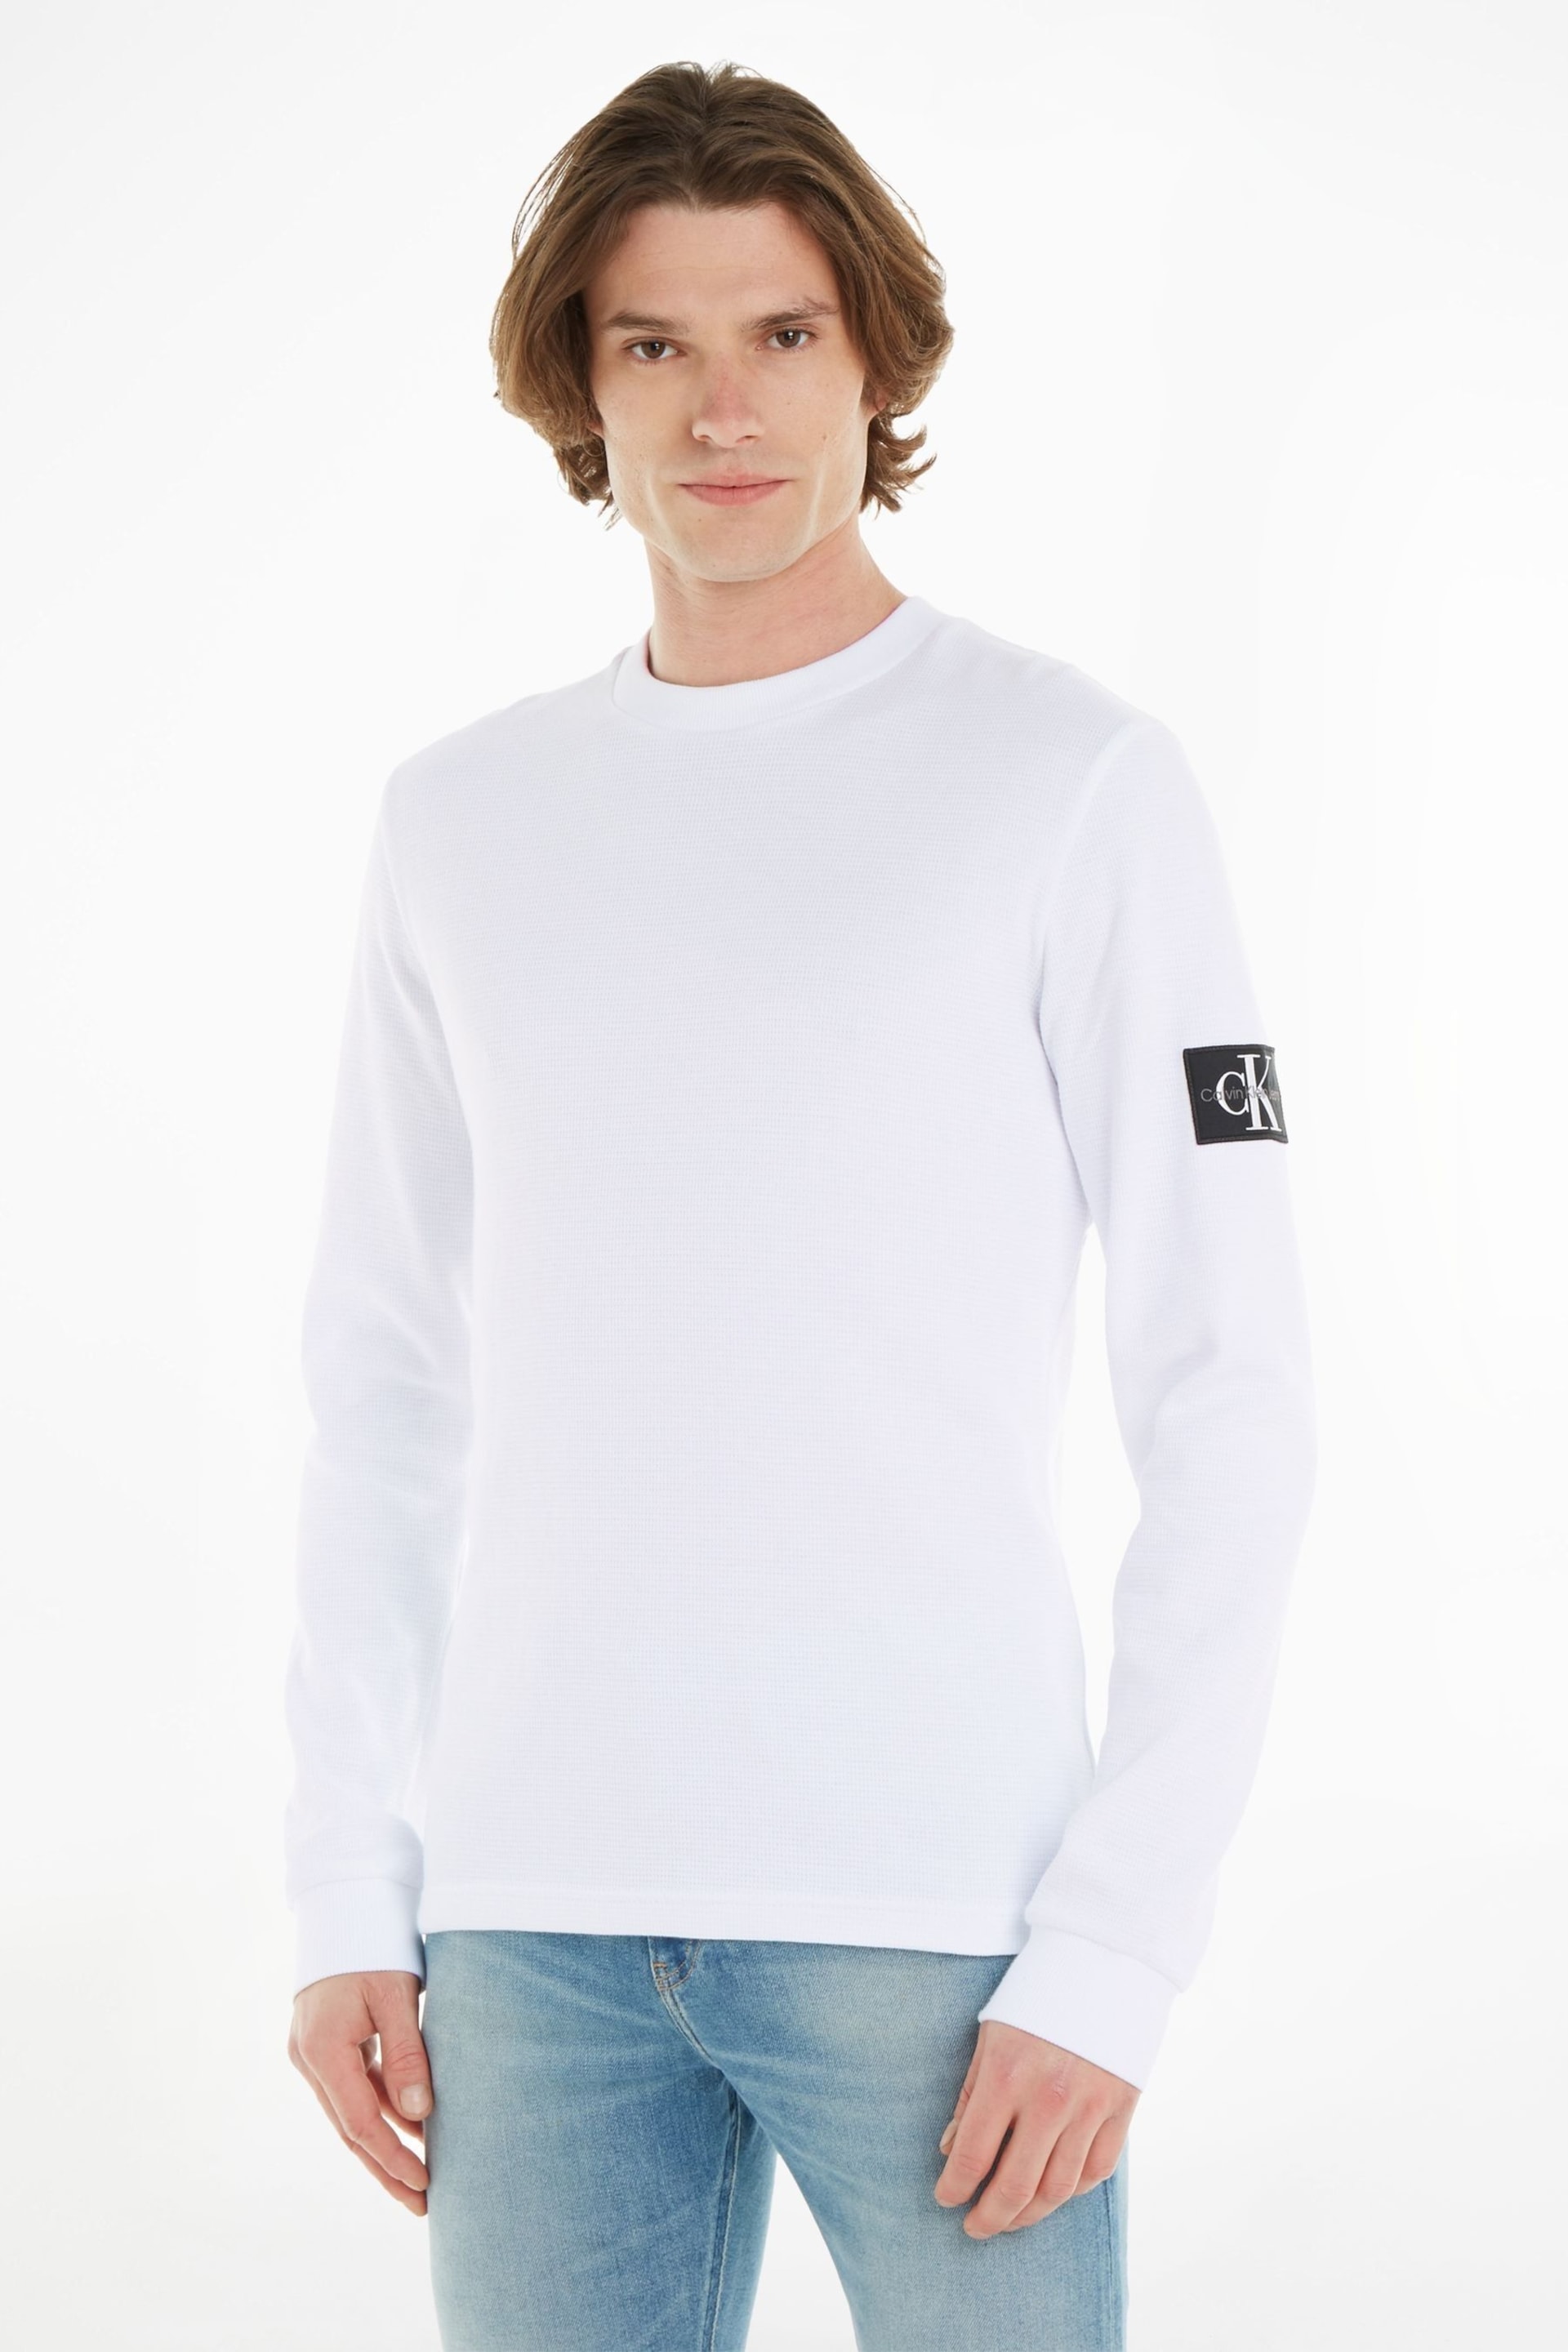 Calvin Klein Jeans Monogram Badge Waffle Long Sleeve White T-Shirt - Image 1 of 6